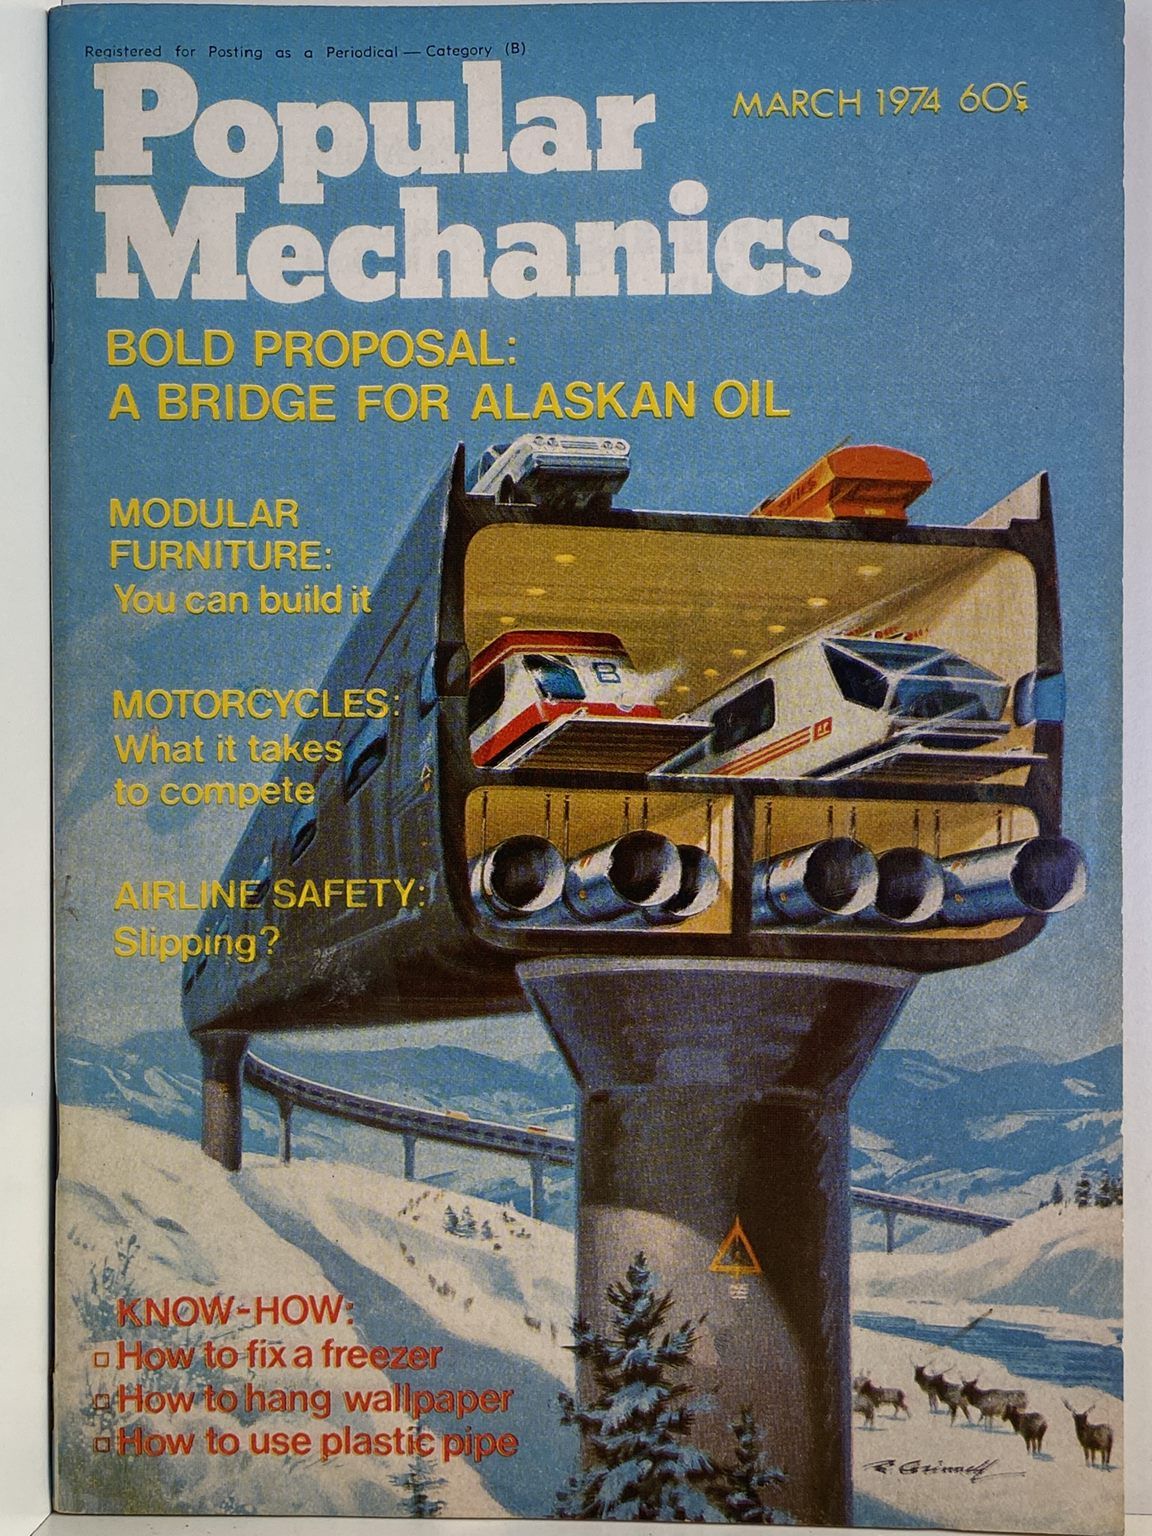 VINTAGE MAGAZINE: Popular Mechanics - Vol. 141, No. 1 - March 1974